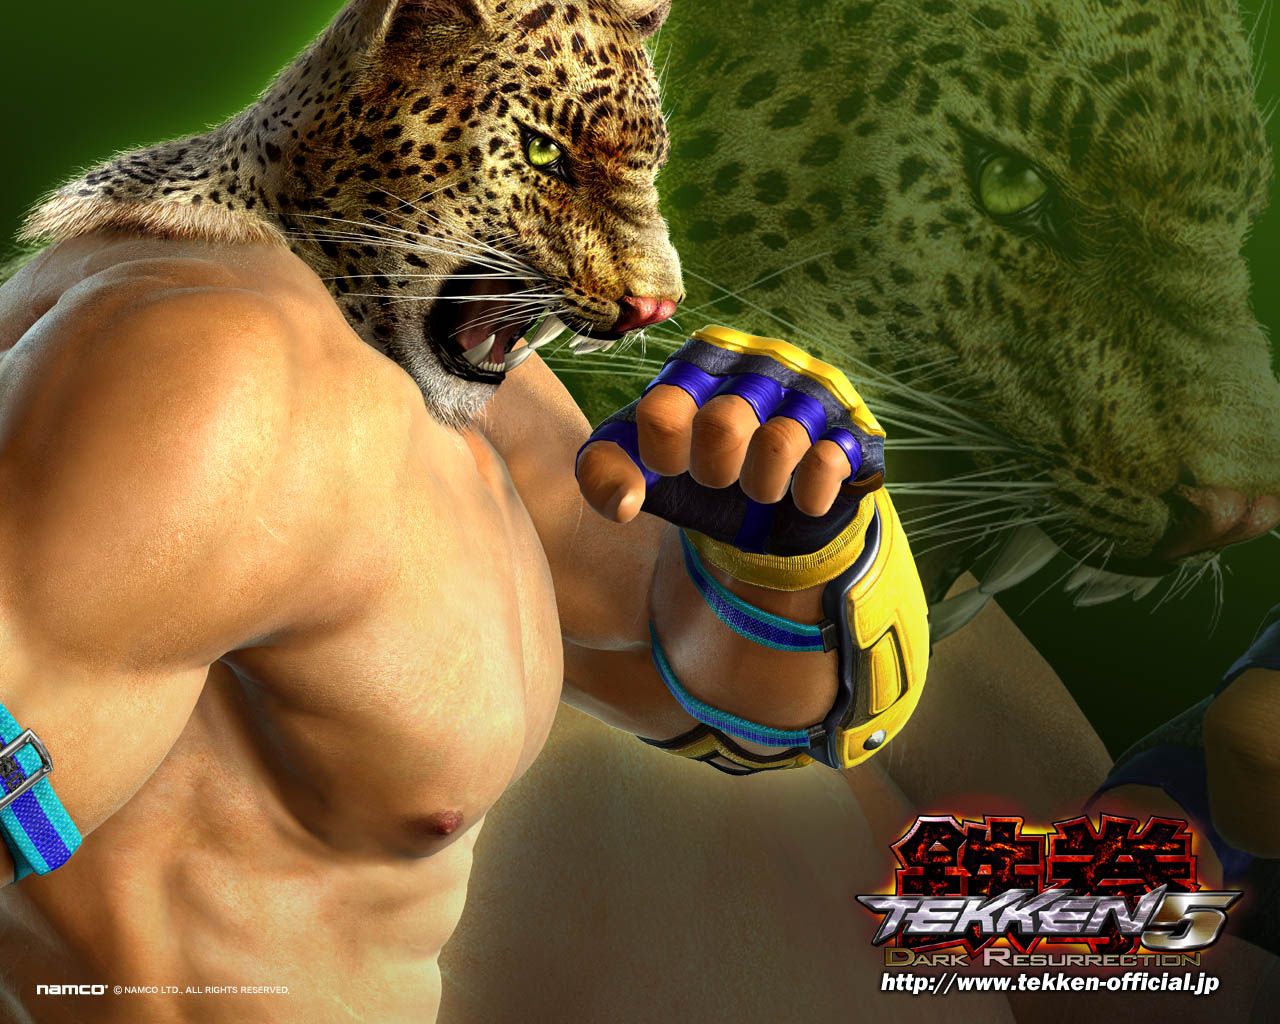 Pics-Wallpapers-Extra Large-Video Game-Background :: Tekken 5-King 2-WP-1280 